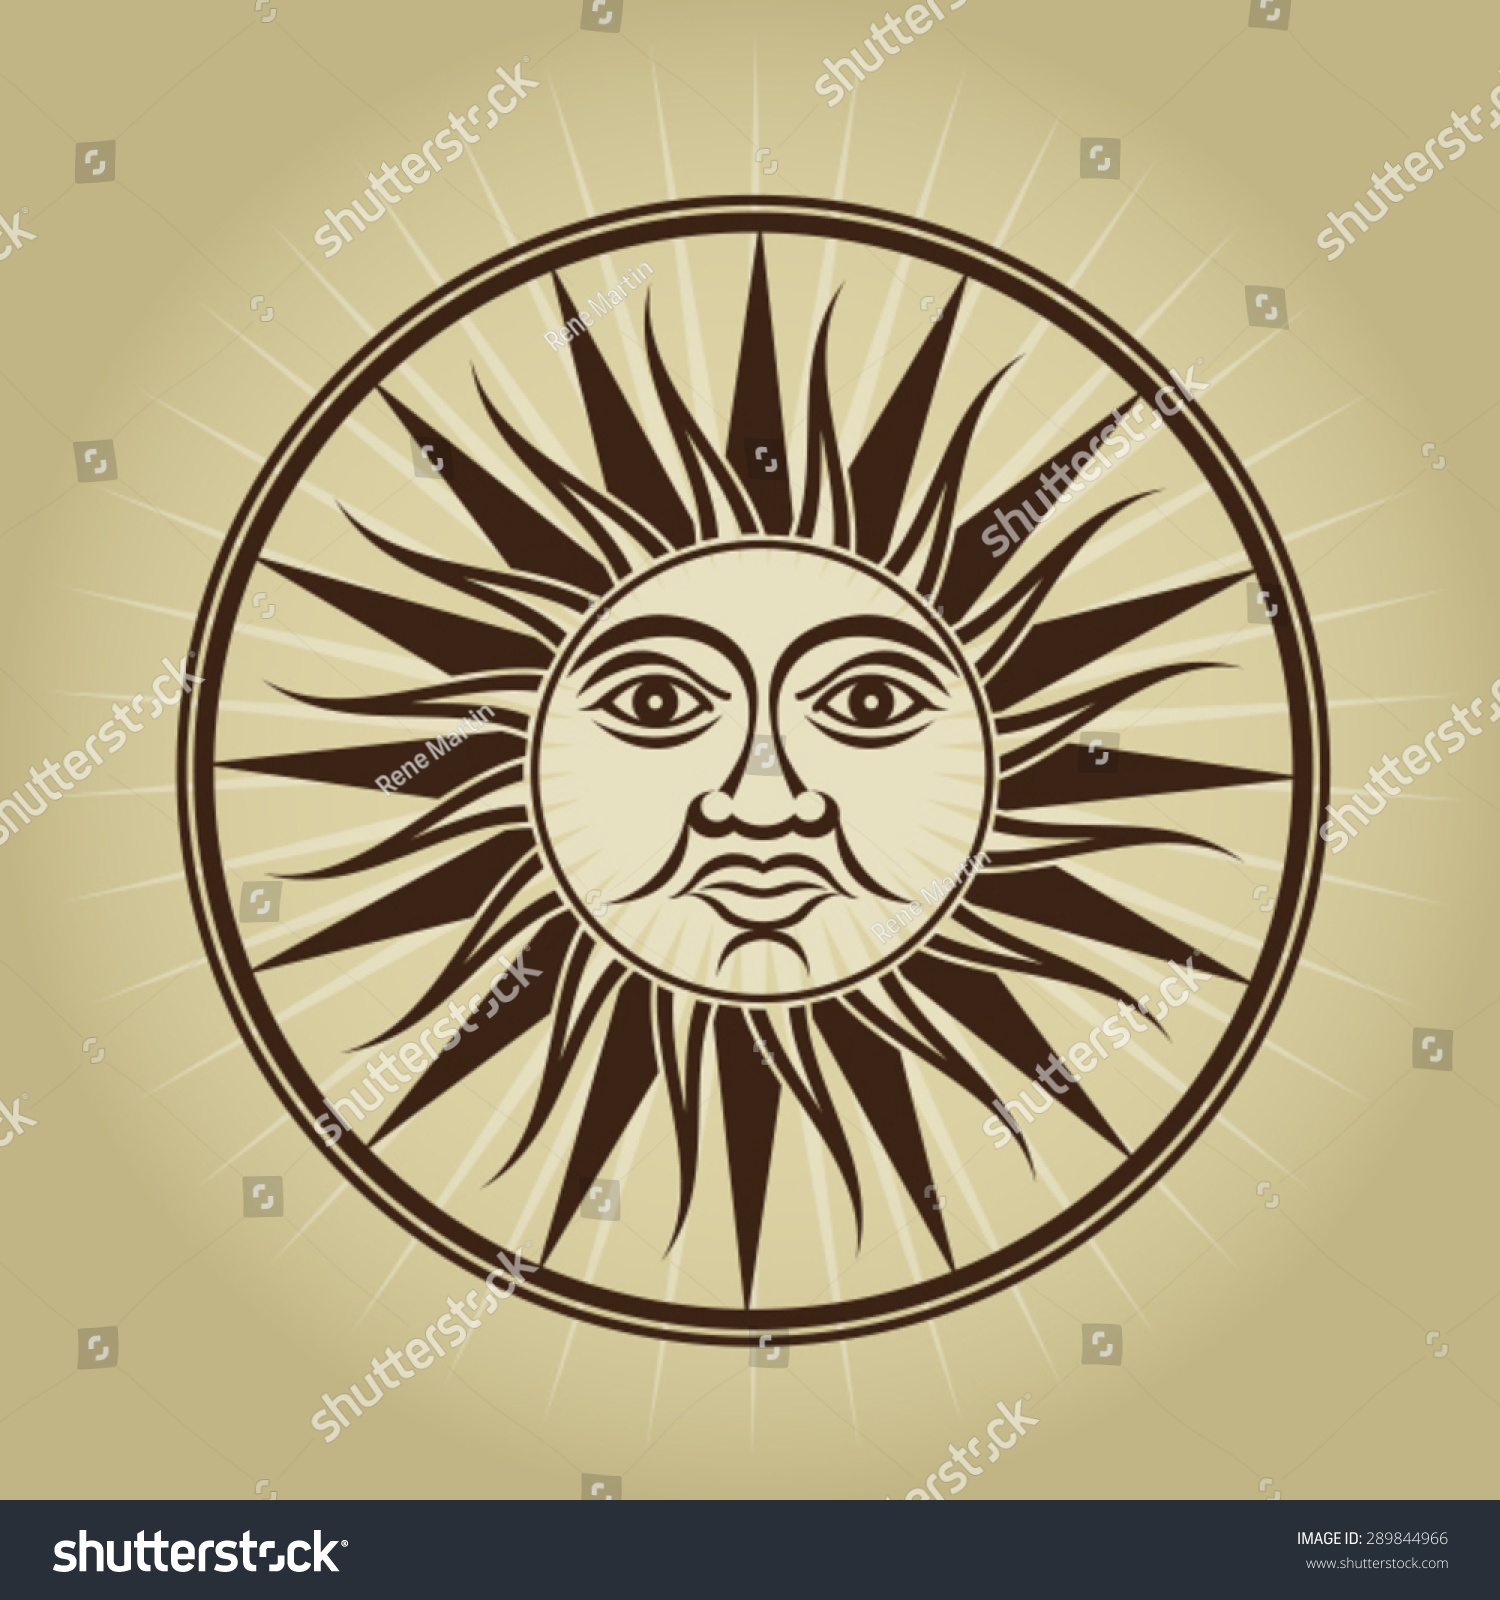 Vintage Retro Sun Illustration - 289844966 : Shutterstock